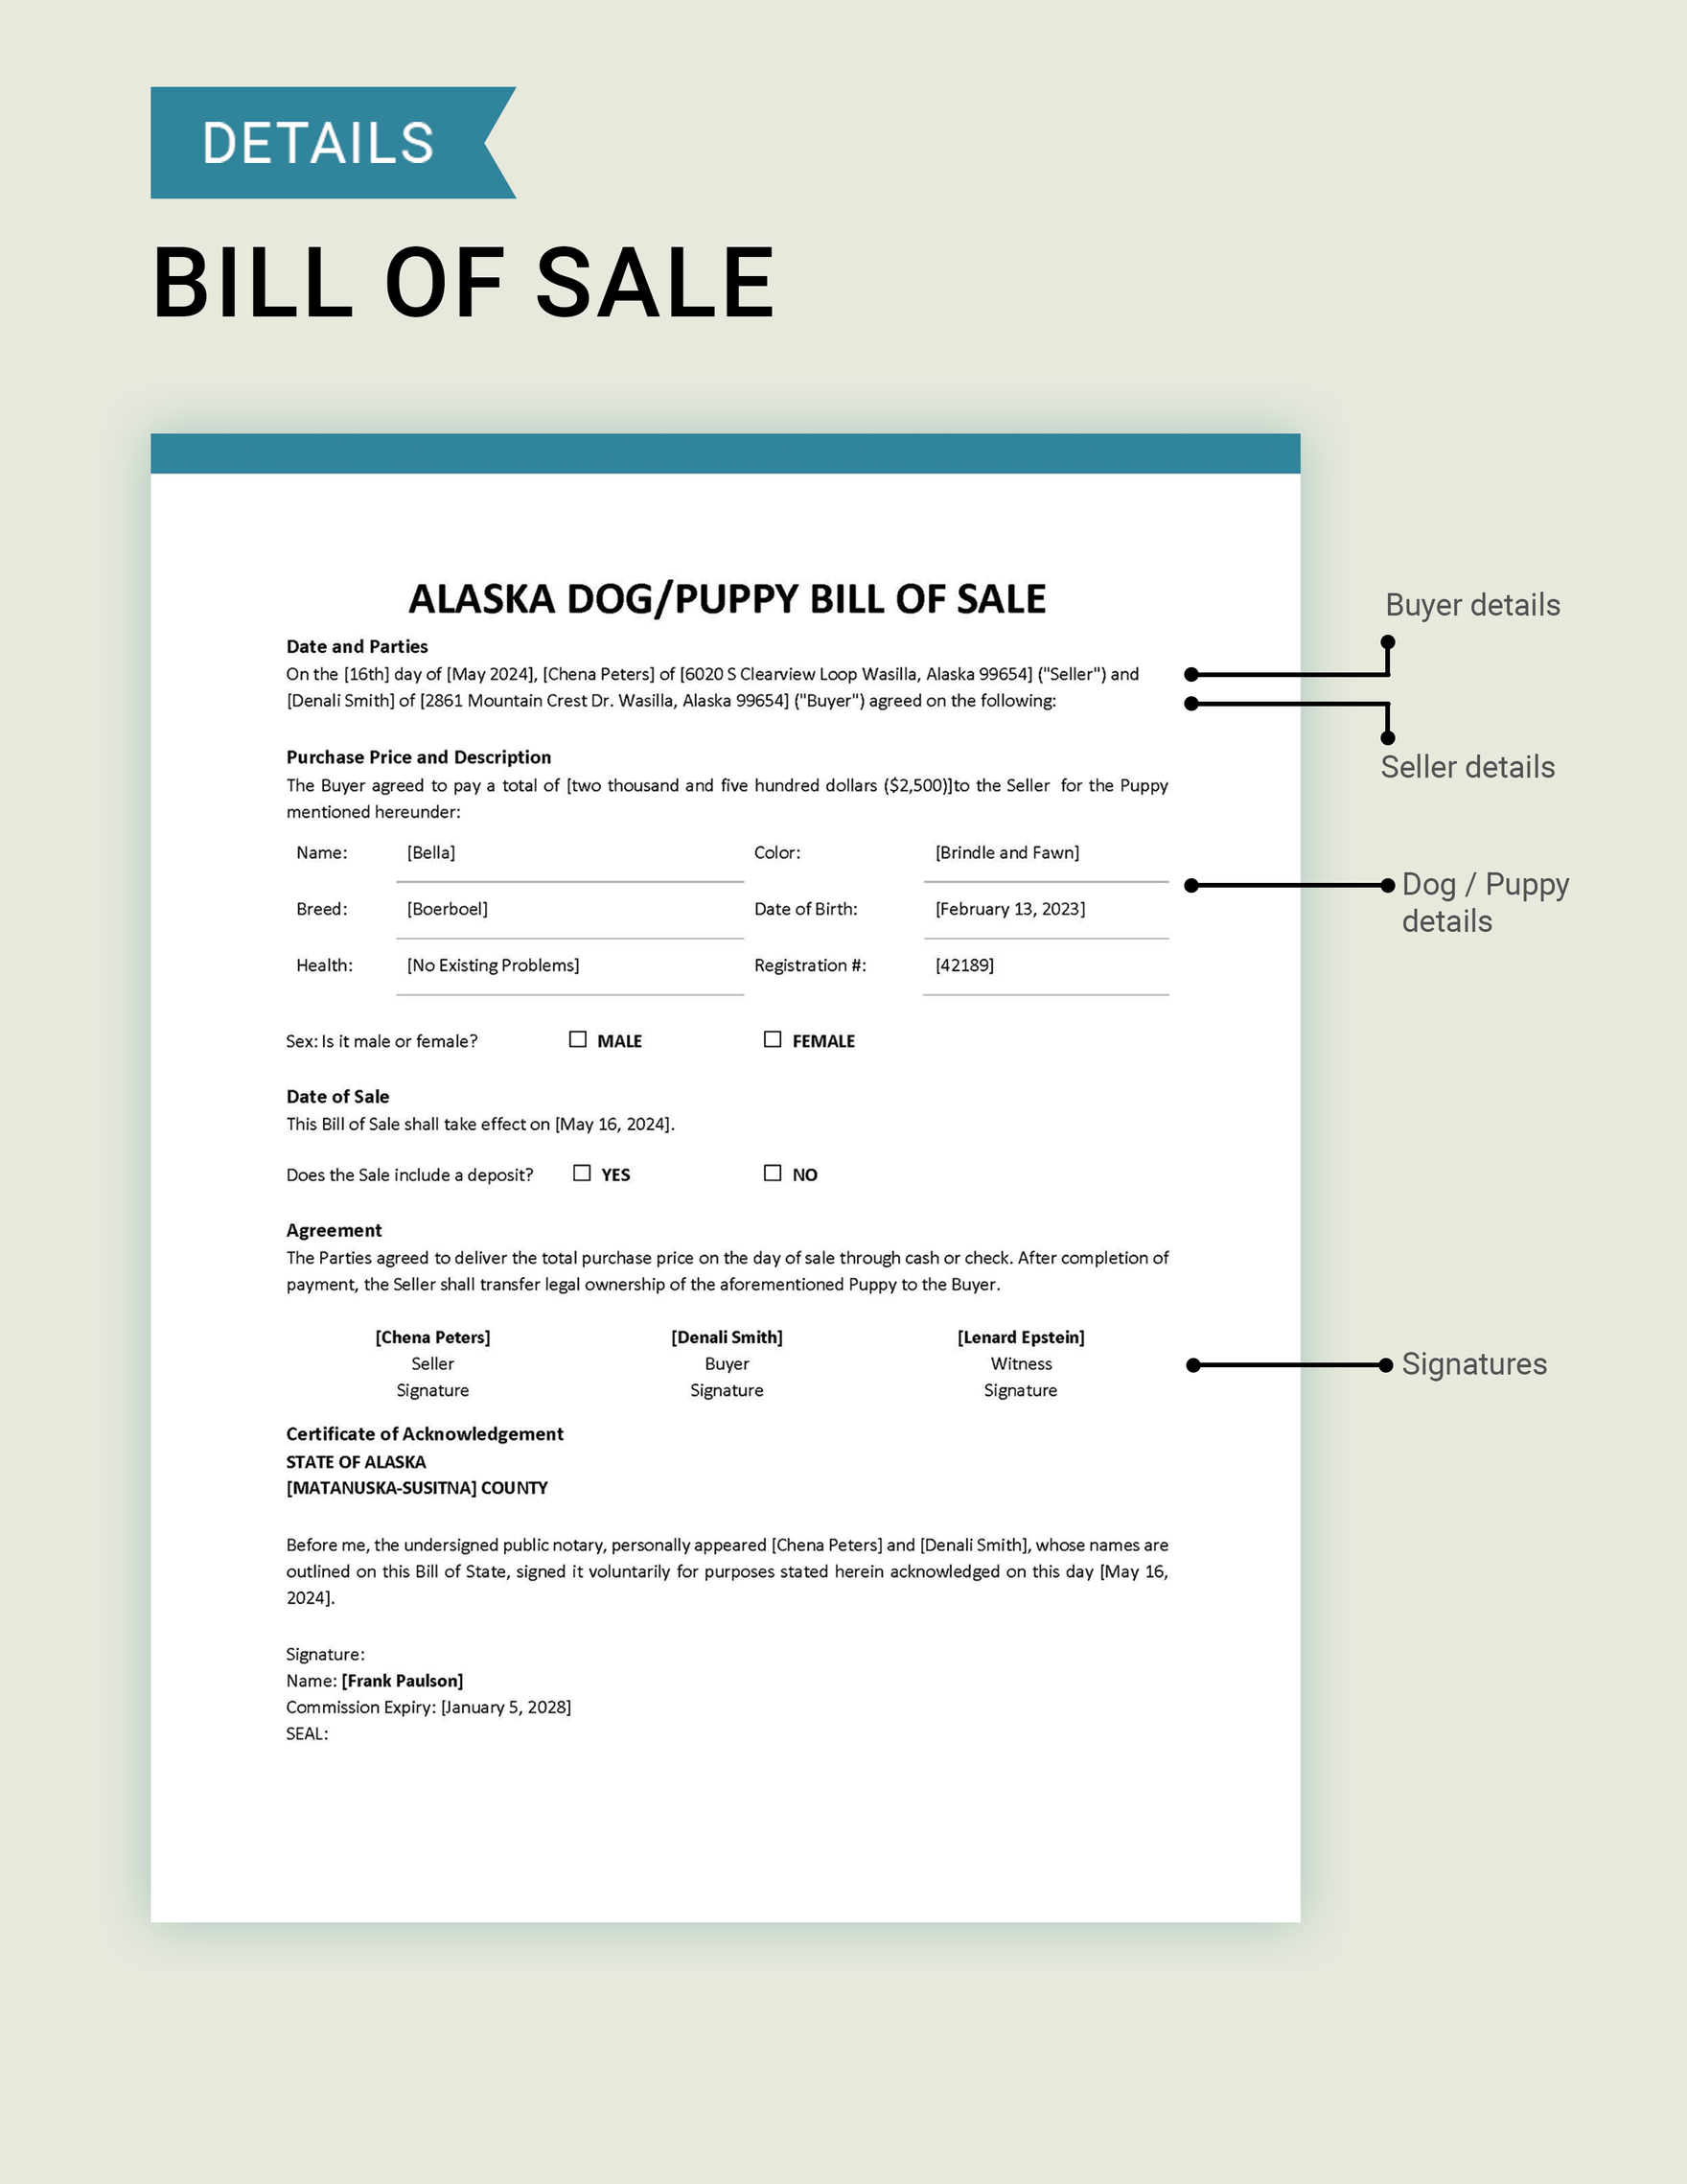 Alaska Dog / Puppy Bill of Sale Form Template